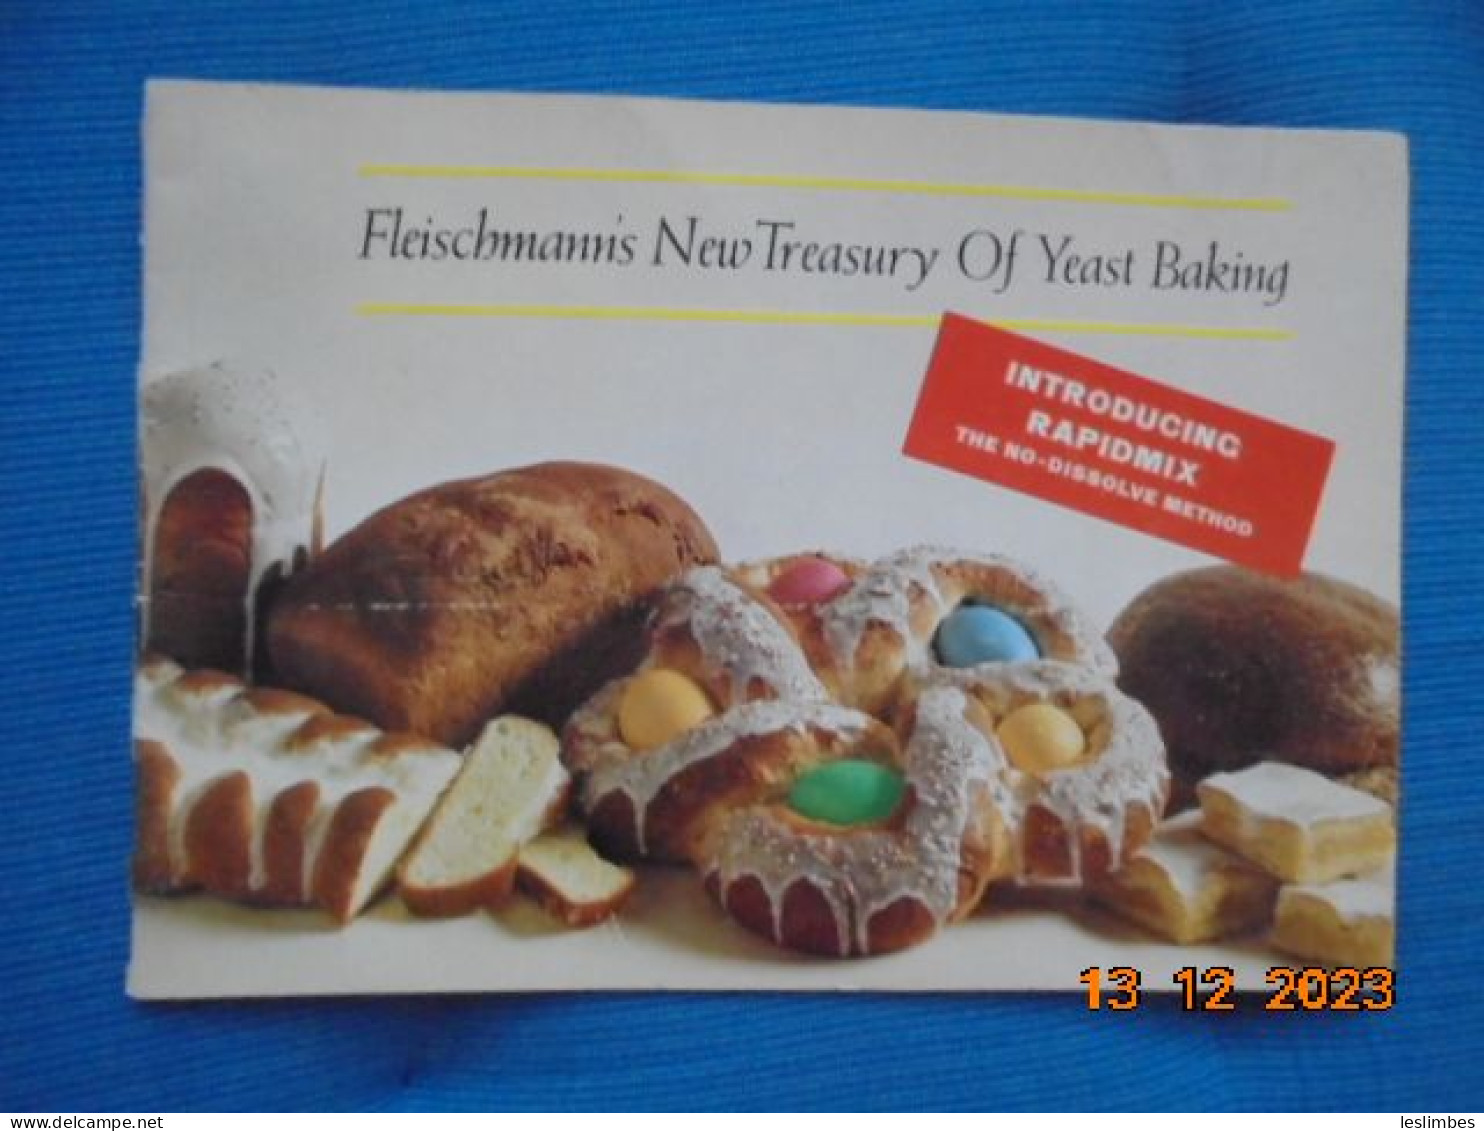 Fleischmann's New Treasury Of Yeast Baking : Introducing Rapidmix The No-Dissolve Method 1968 - Nordamerika